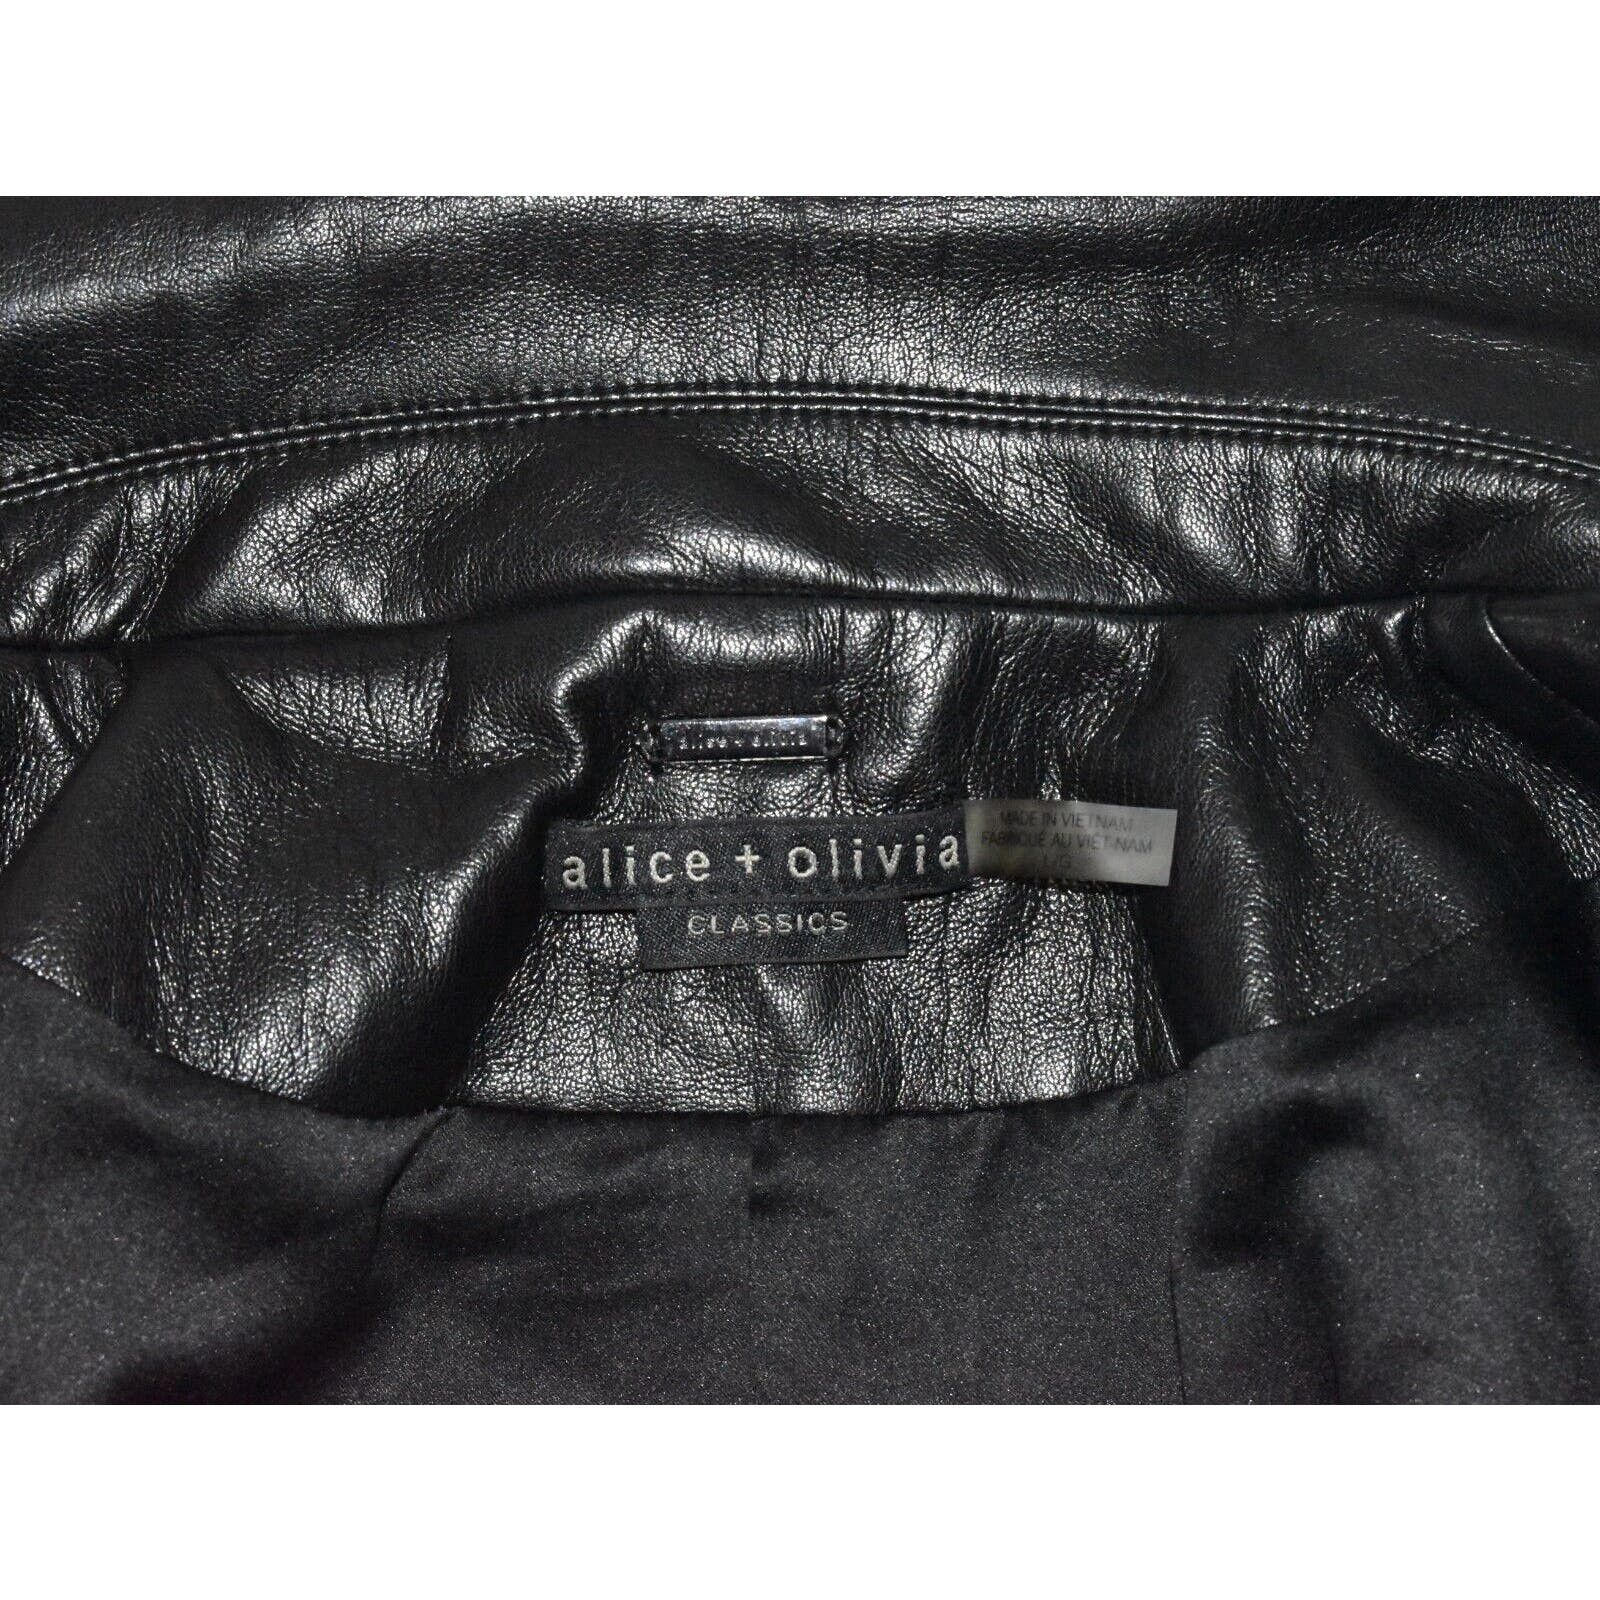 Alice + Olivia ALICE + OLIVIA Black Faux Leather Blazer Jacket Size L Size L / US 10 / IT 46 - 5 Thumbnail